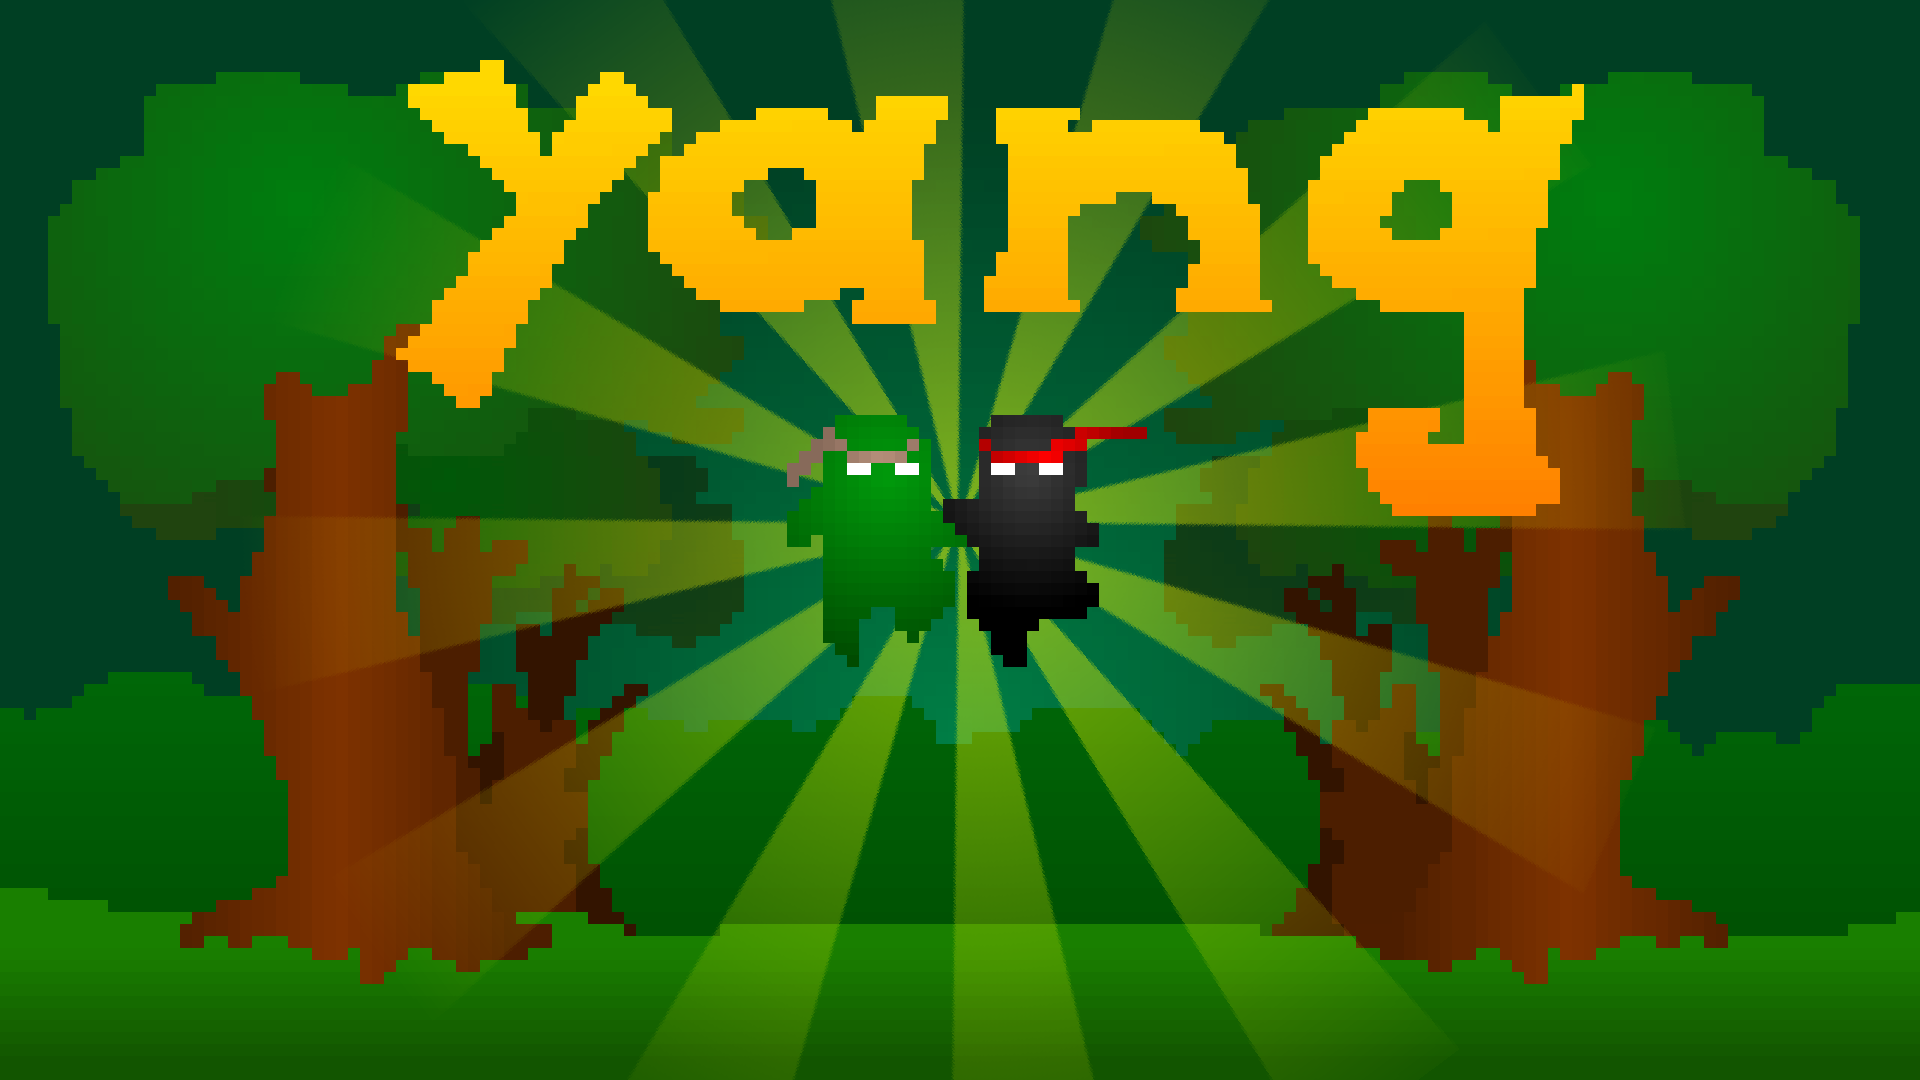 Yang (Yet another ninja game)